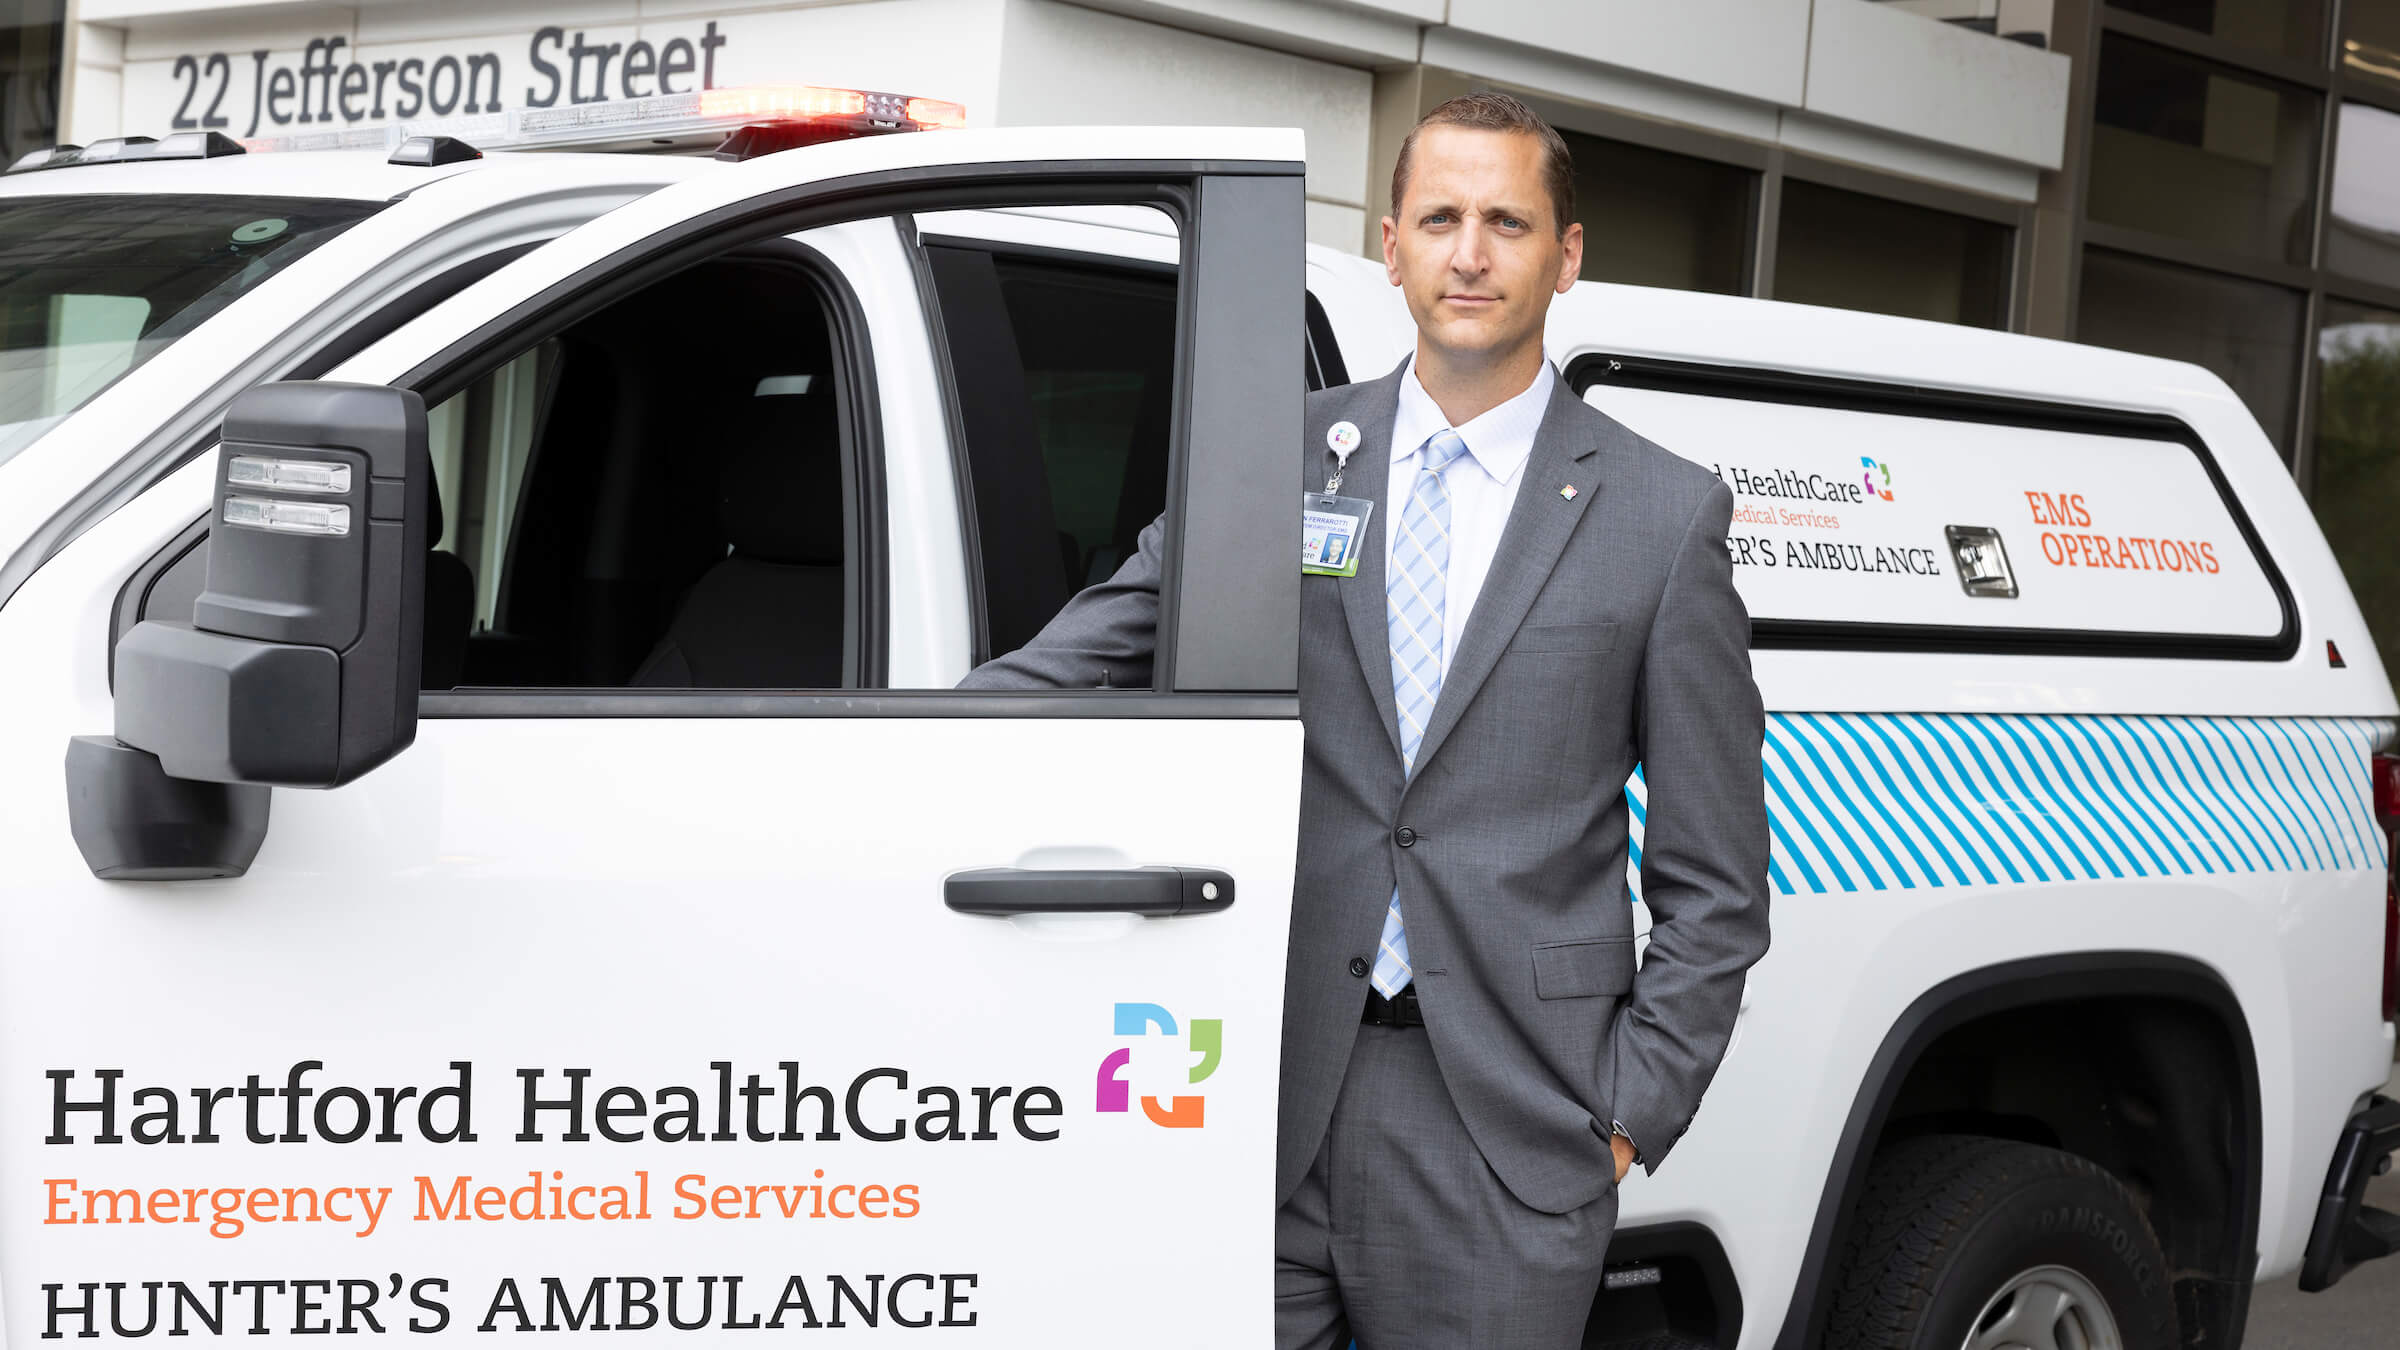 Kevin Ferrarotti stands next to an ambulance